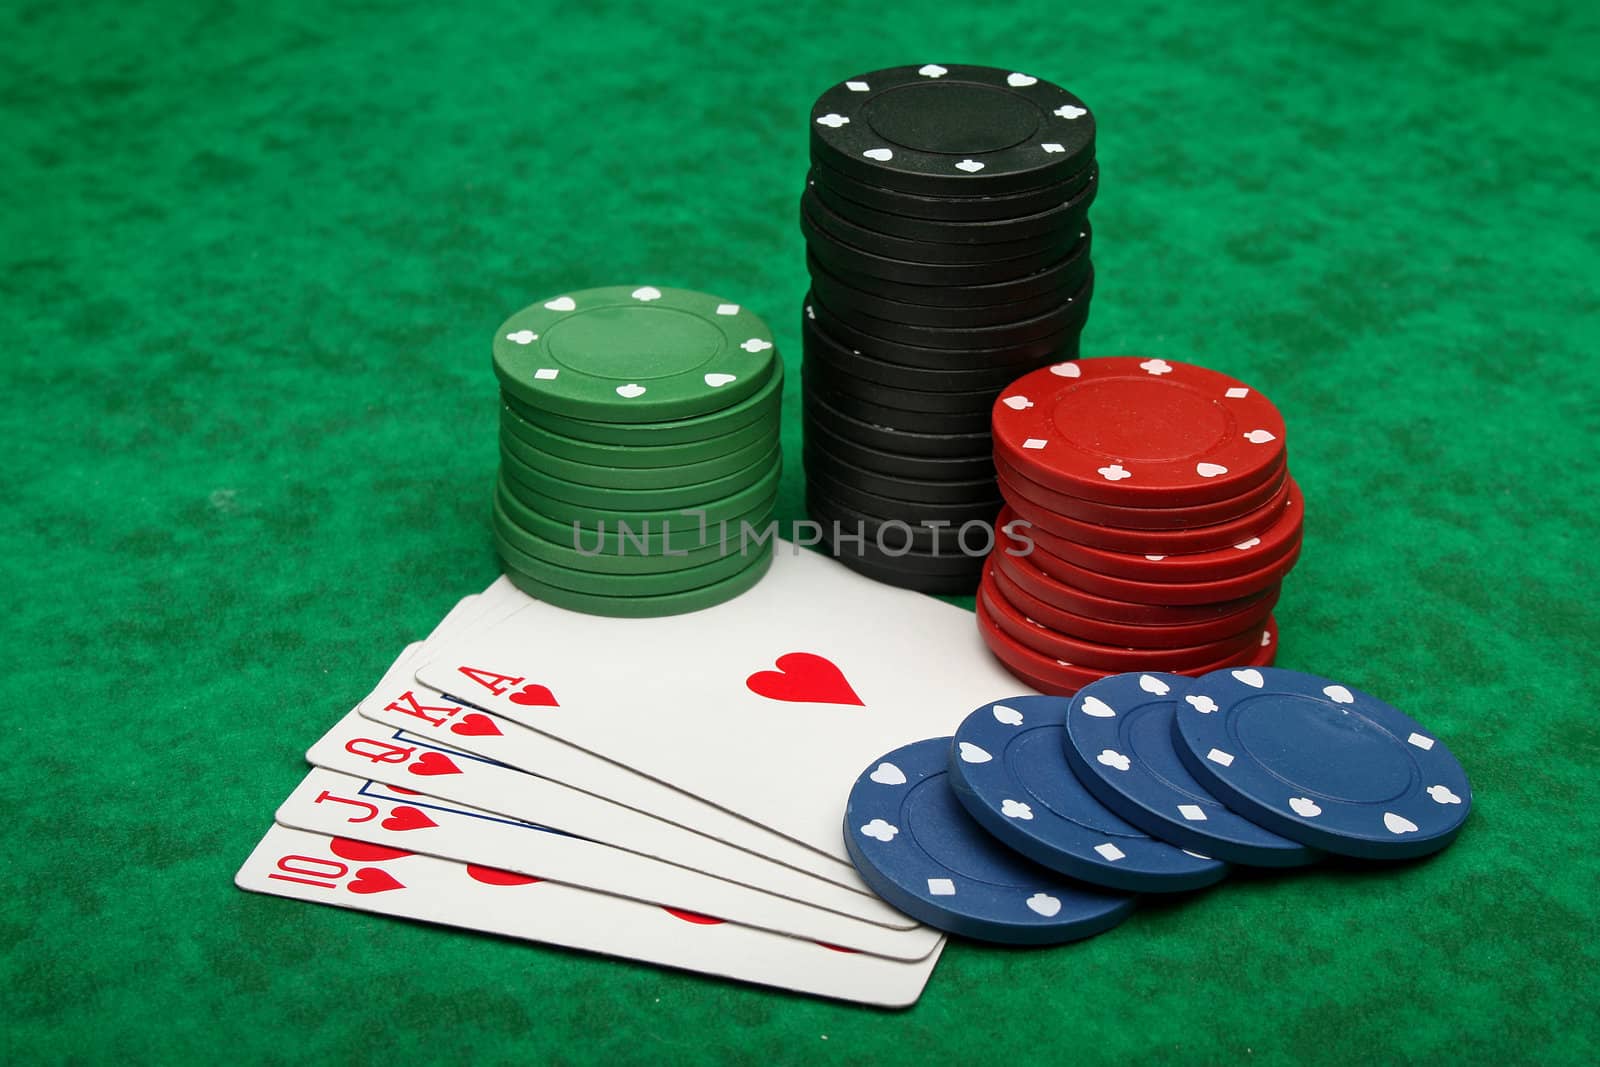 Royal Flush with gambling chips over green felt